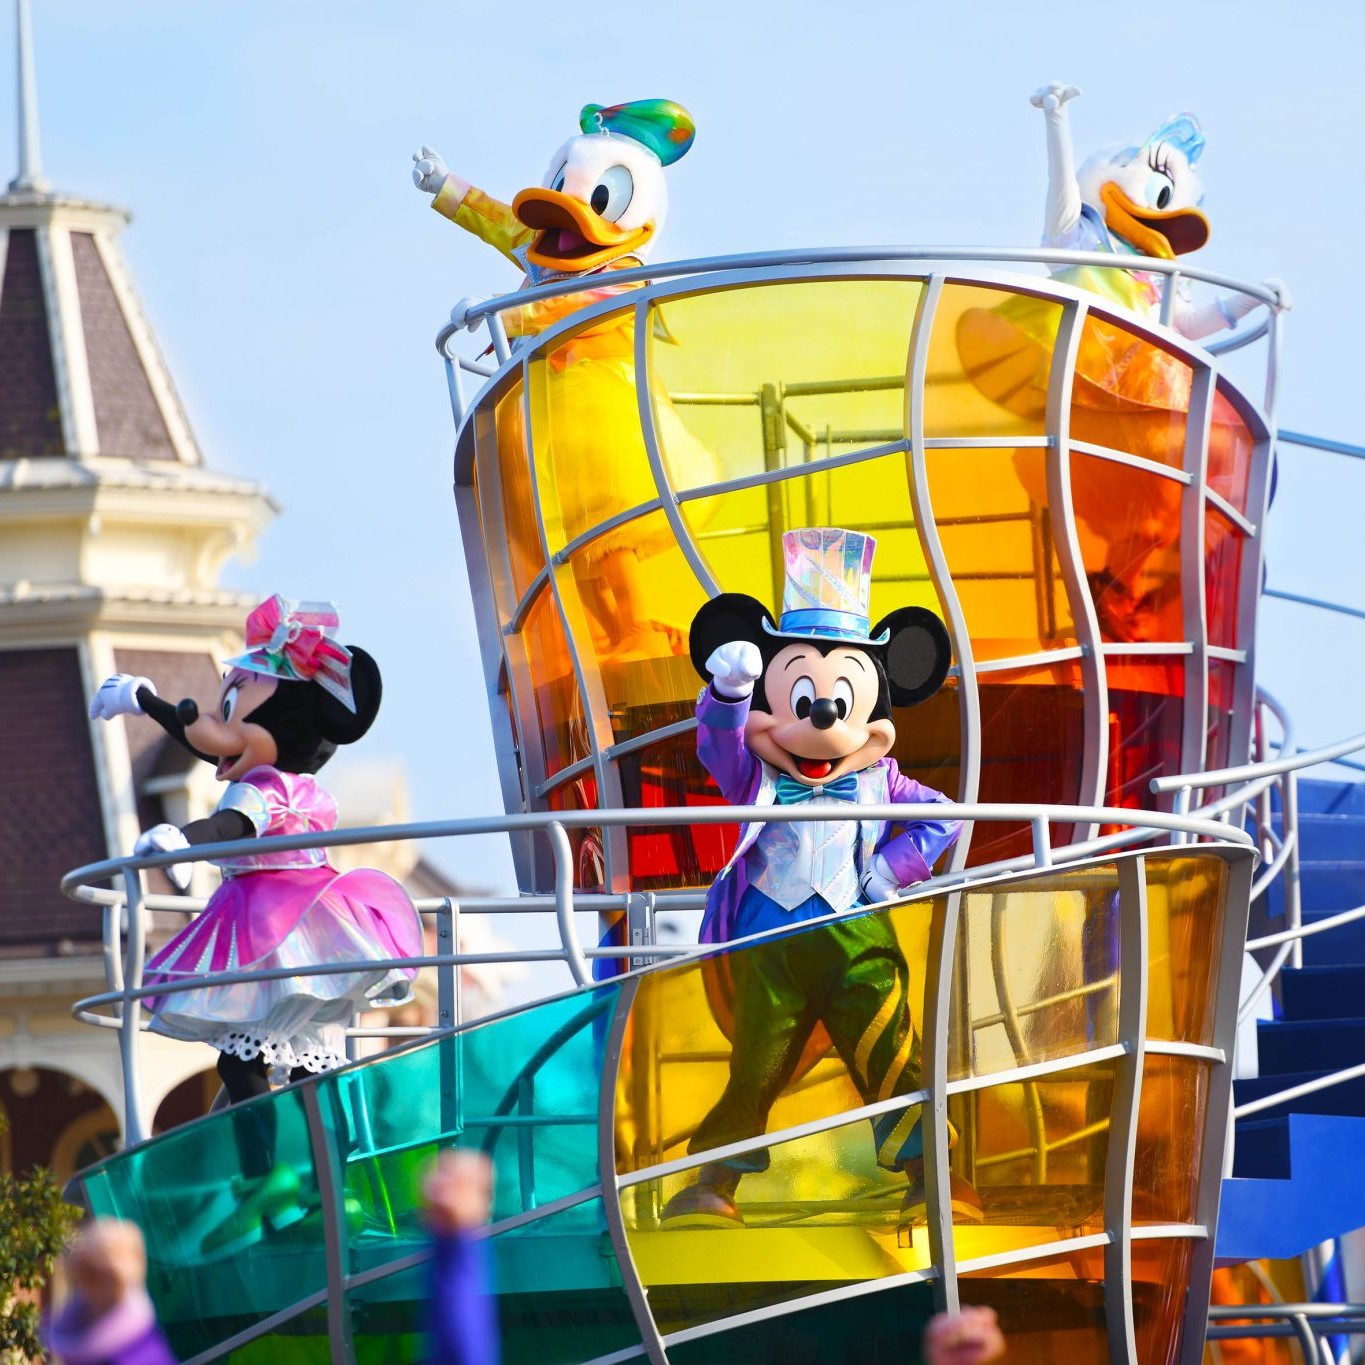 Disneyland Paris is Celebrating its 30th Anniversary